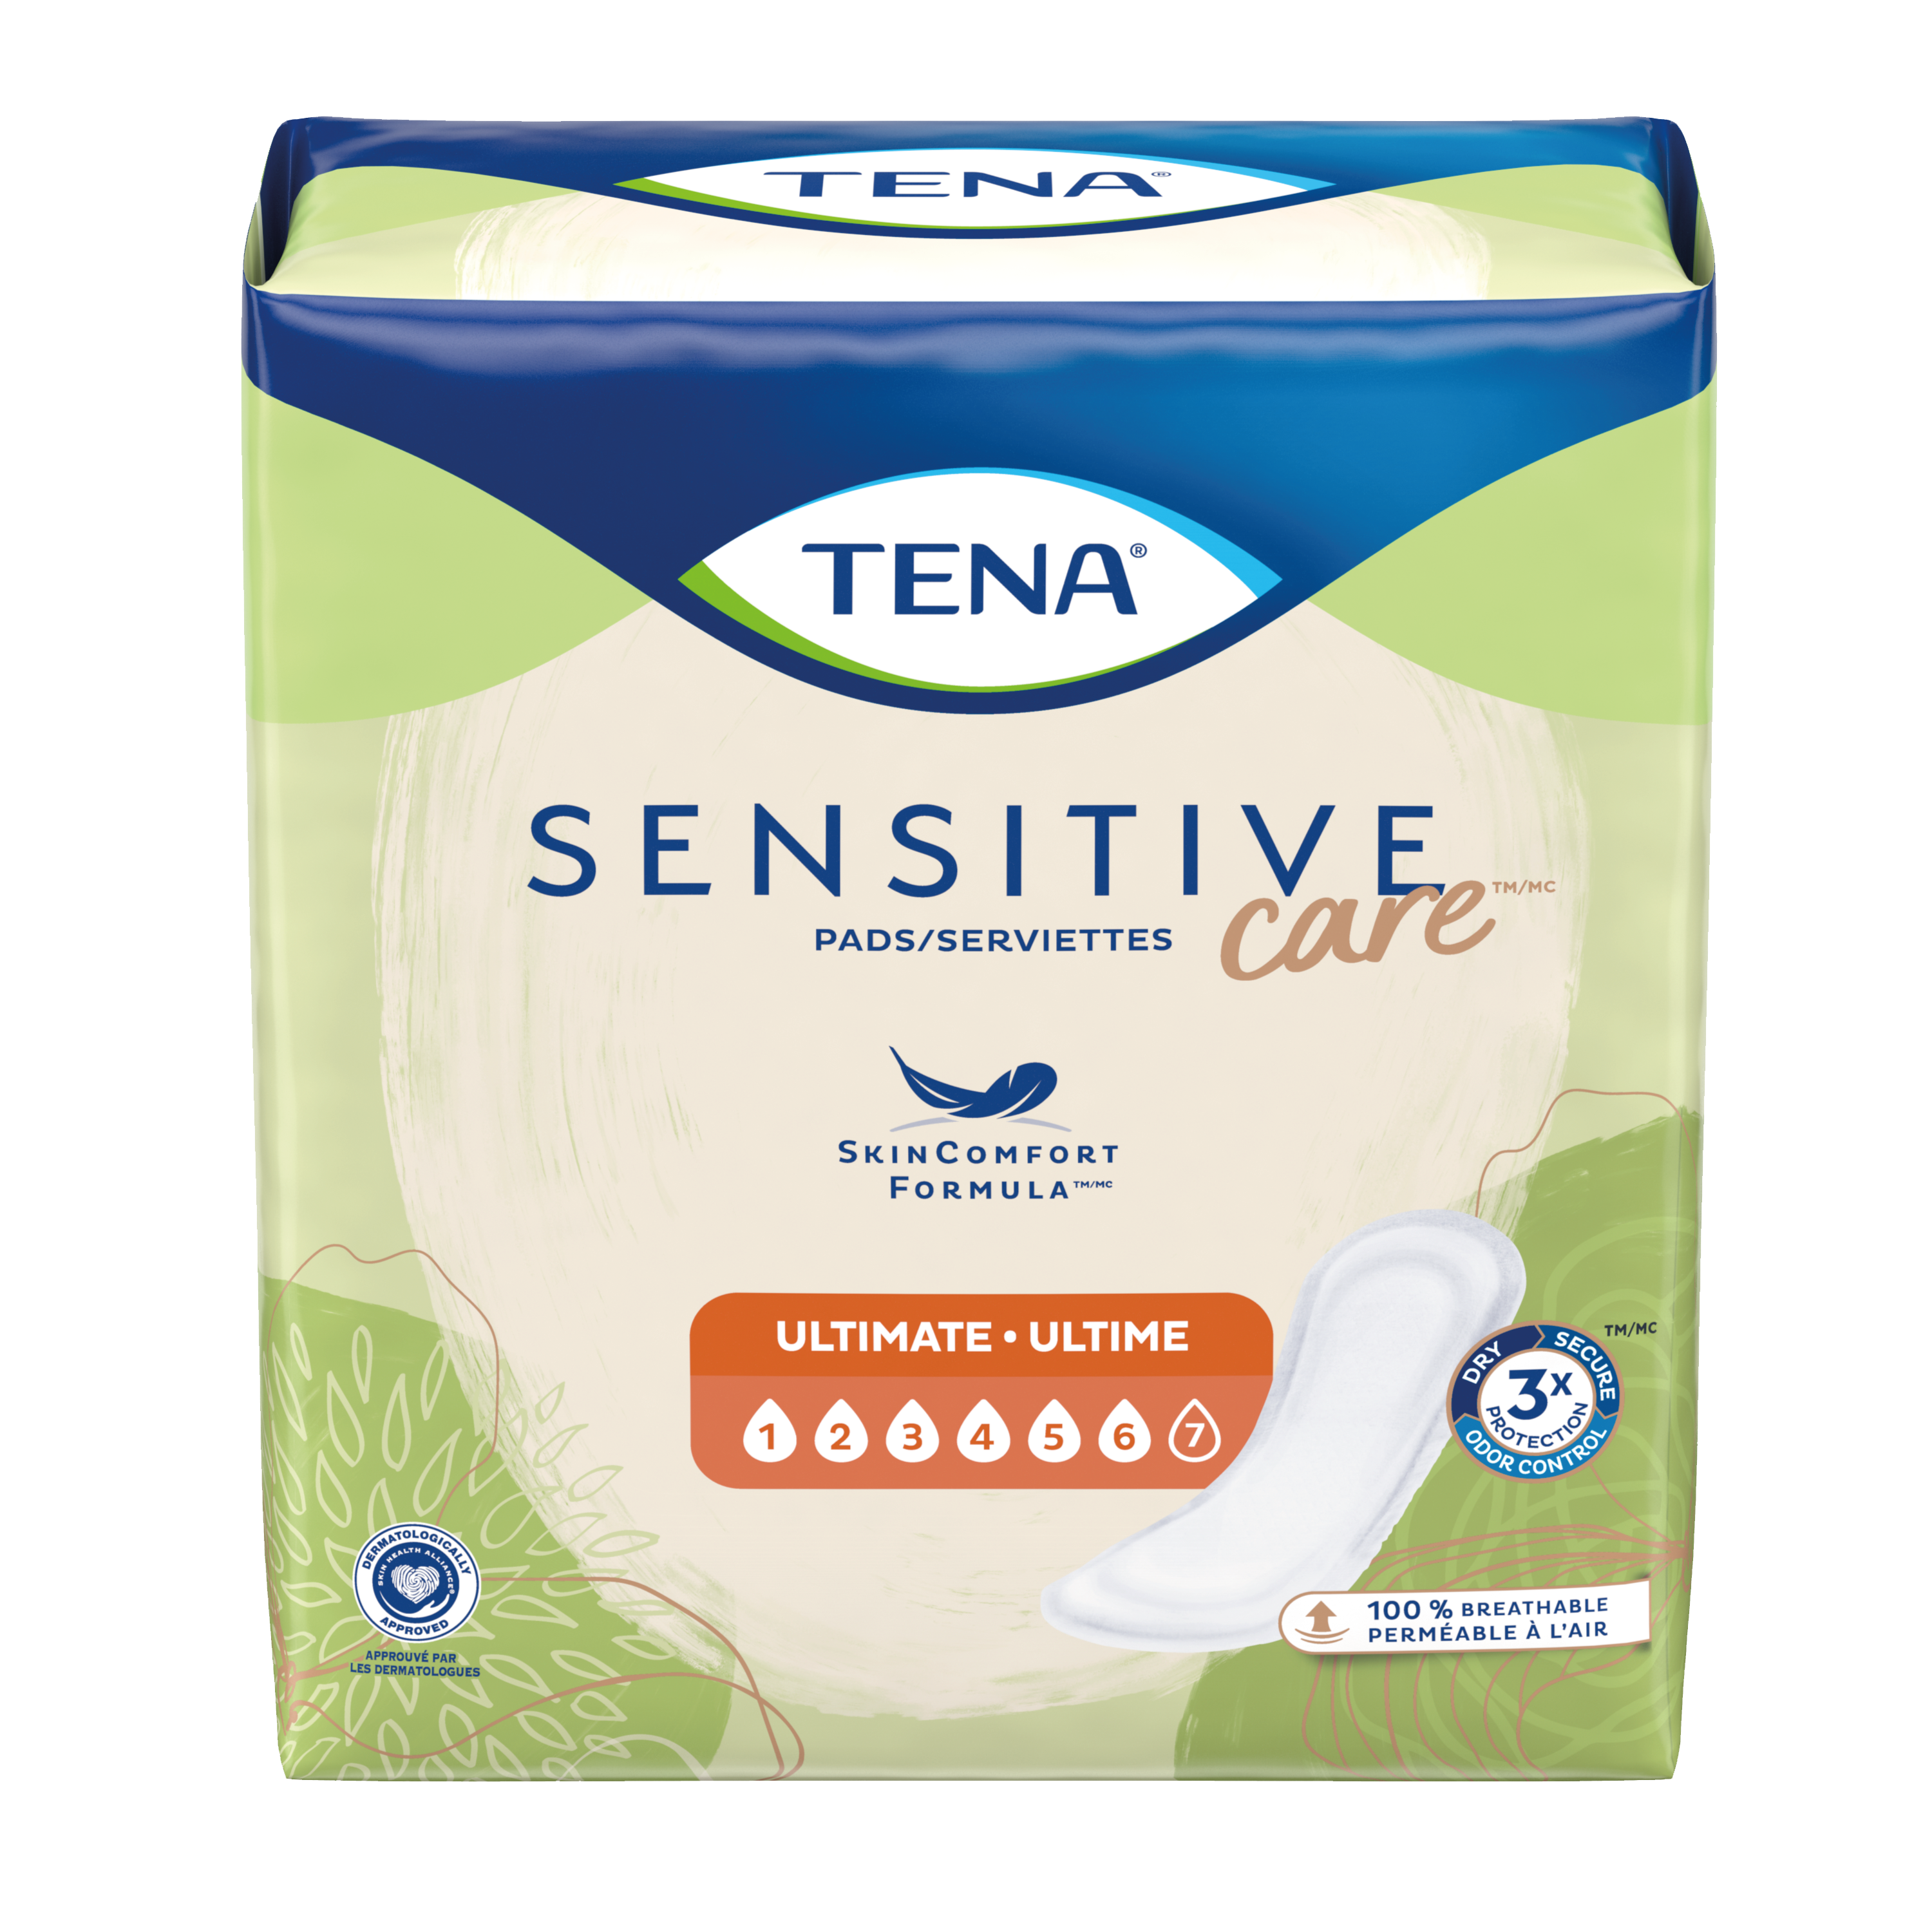 A package of TENA Ultimate Regular Pads